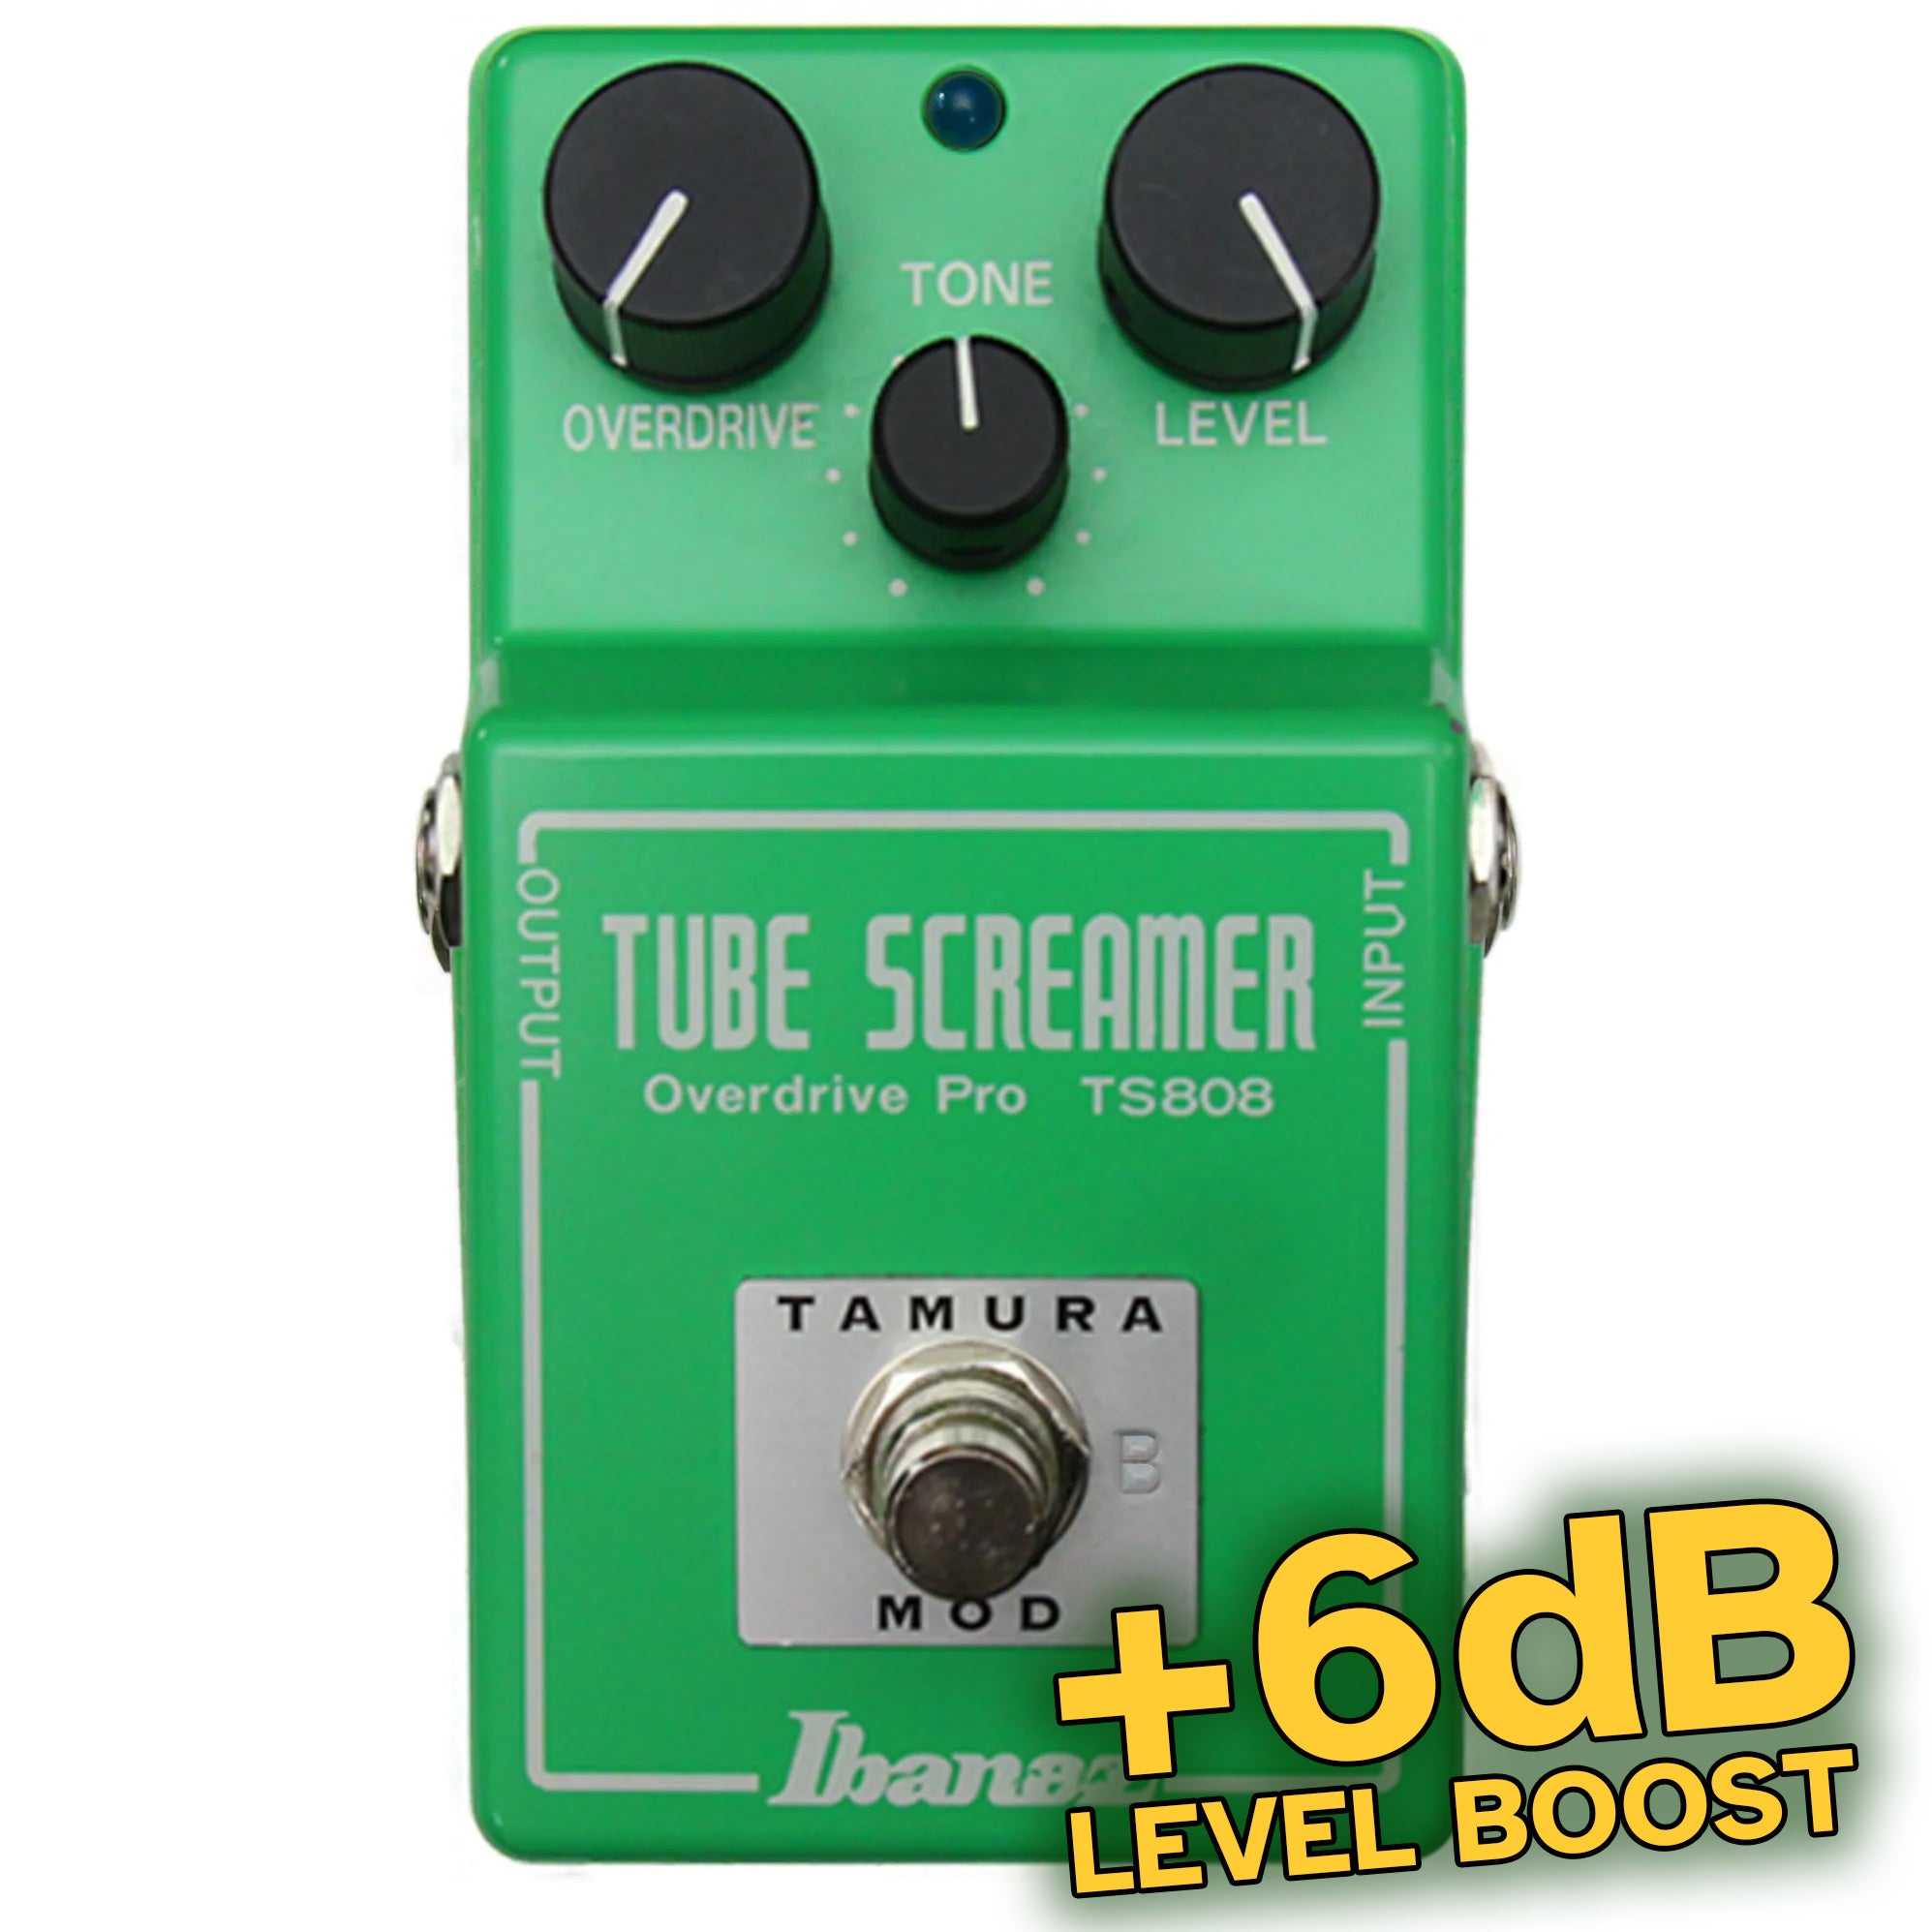 TAMURA-MOD TS9 Tube Screamer (TS9TM) – Godlyke Distributing, Inc.